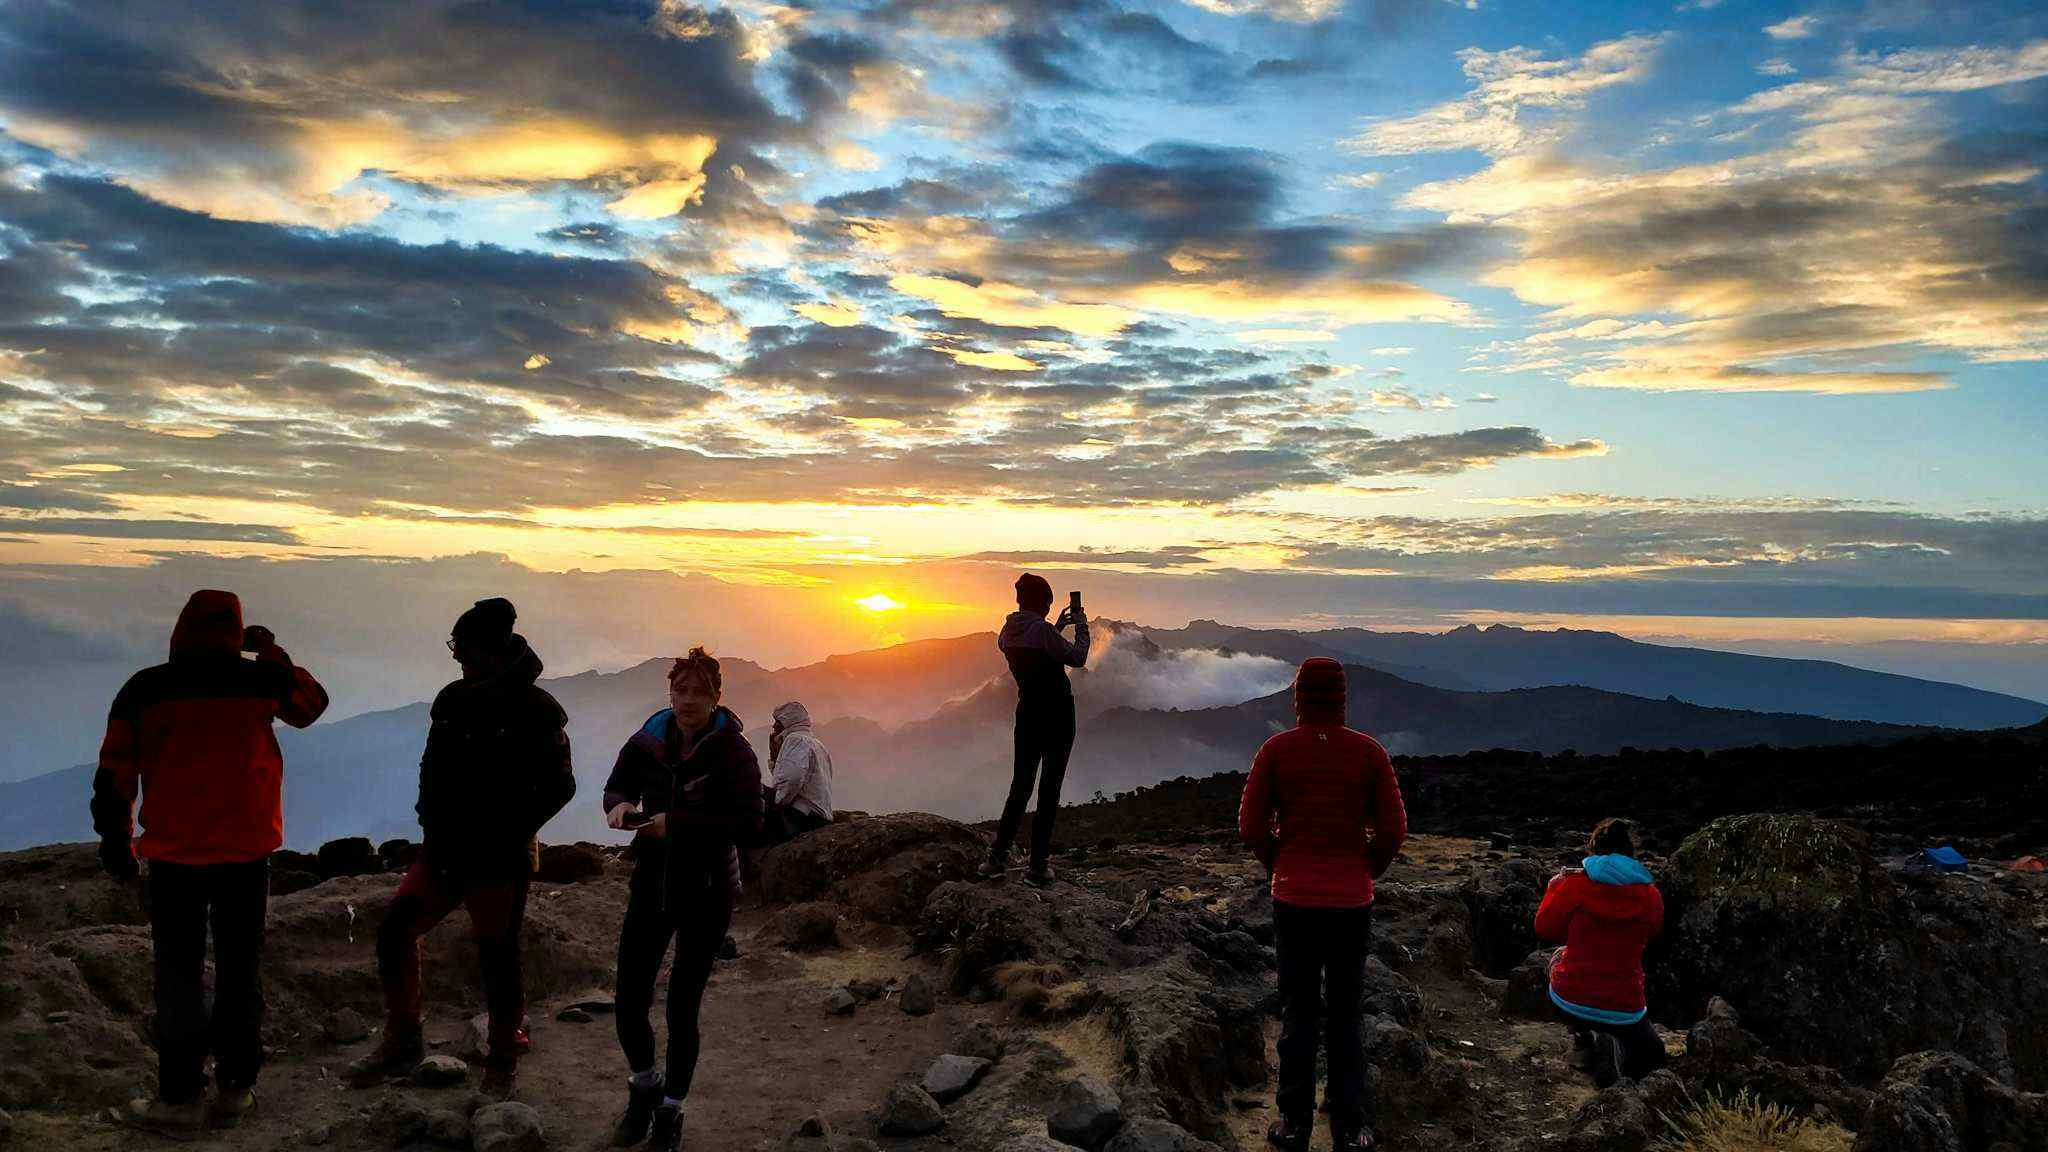 Trekkers admiring the sunset from Shira Camp on Mount Kilimanjaro, Tanzania